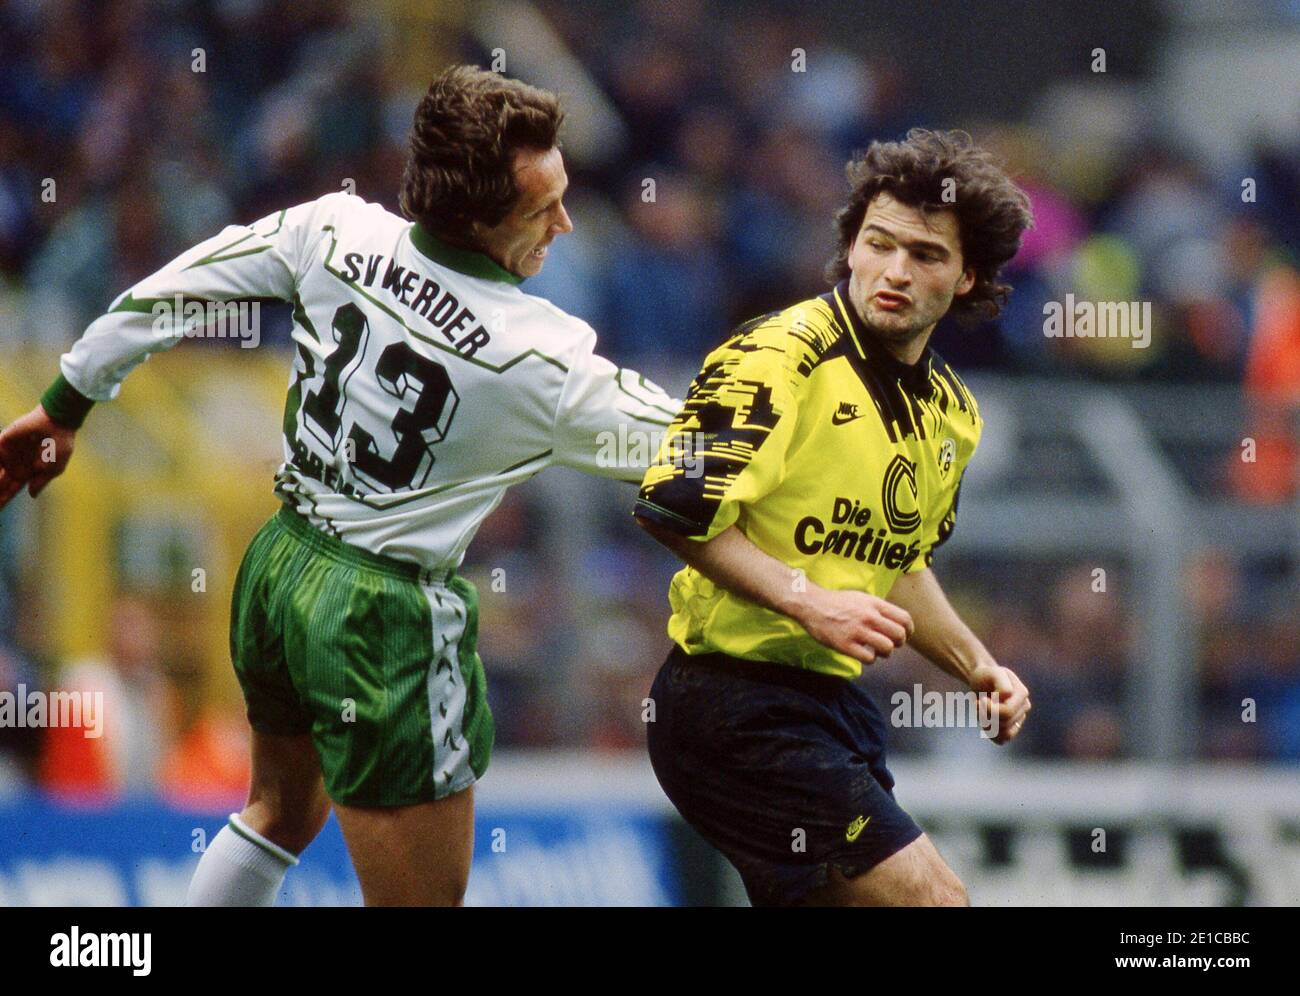 Dortmund, Deutschland. 06th Jan, 2021. firo: 04/02/1994 1993/94 season  football, soccer ball: archive